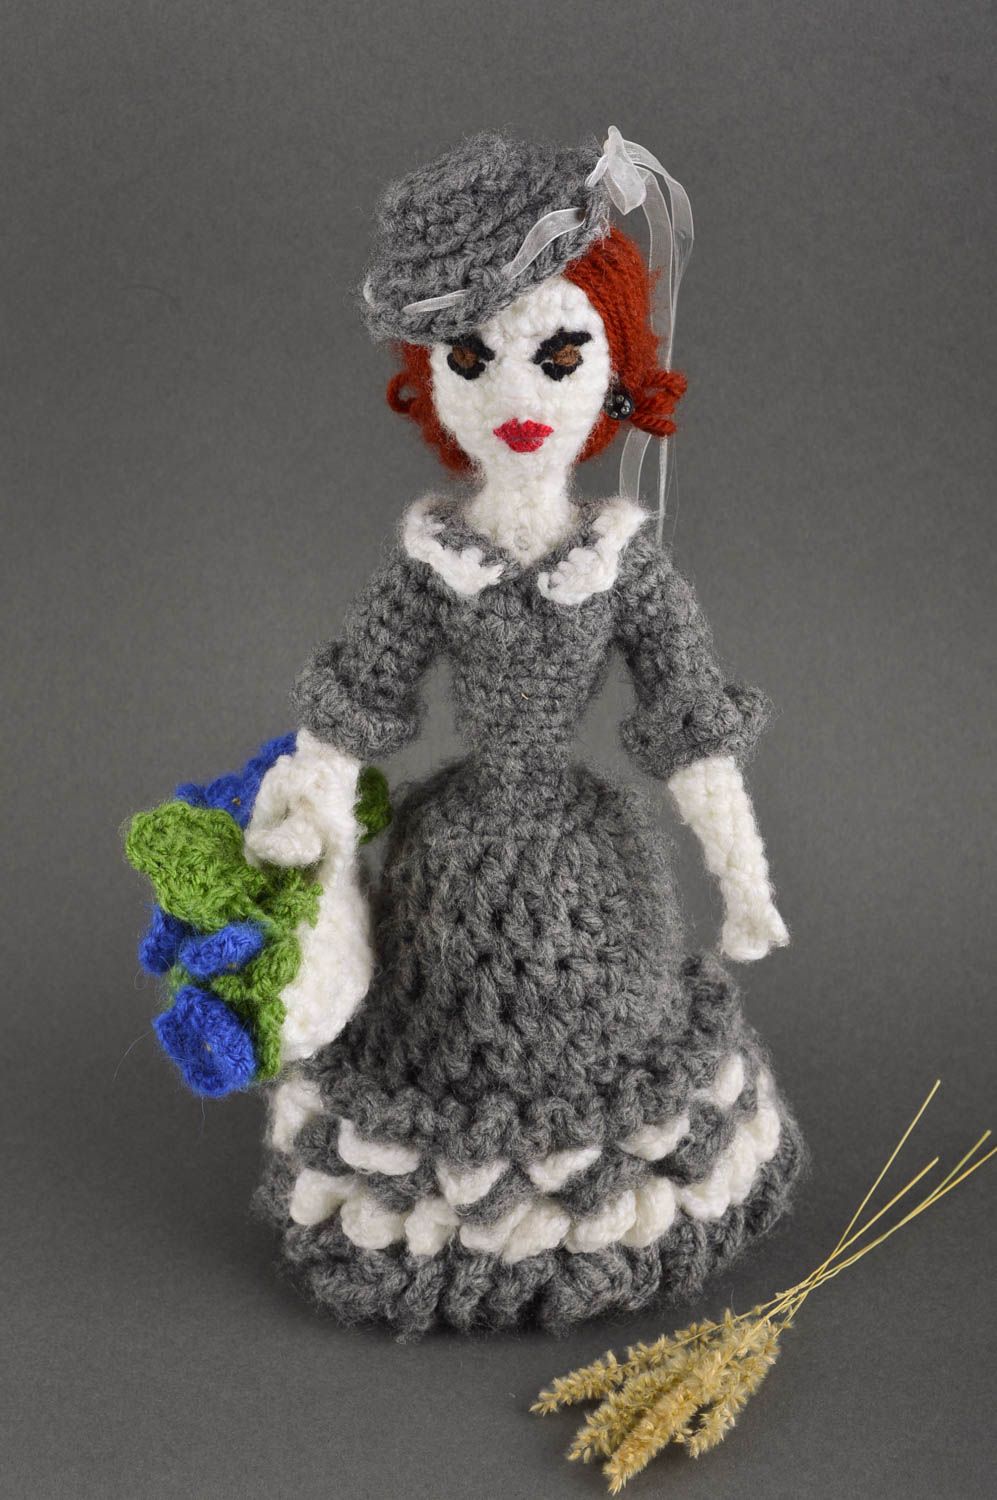 Crochet doll decorative stuffed doll handmade soft toy for children home decor photo 1